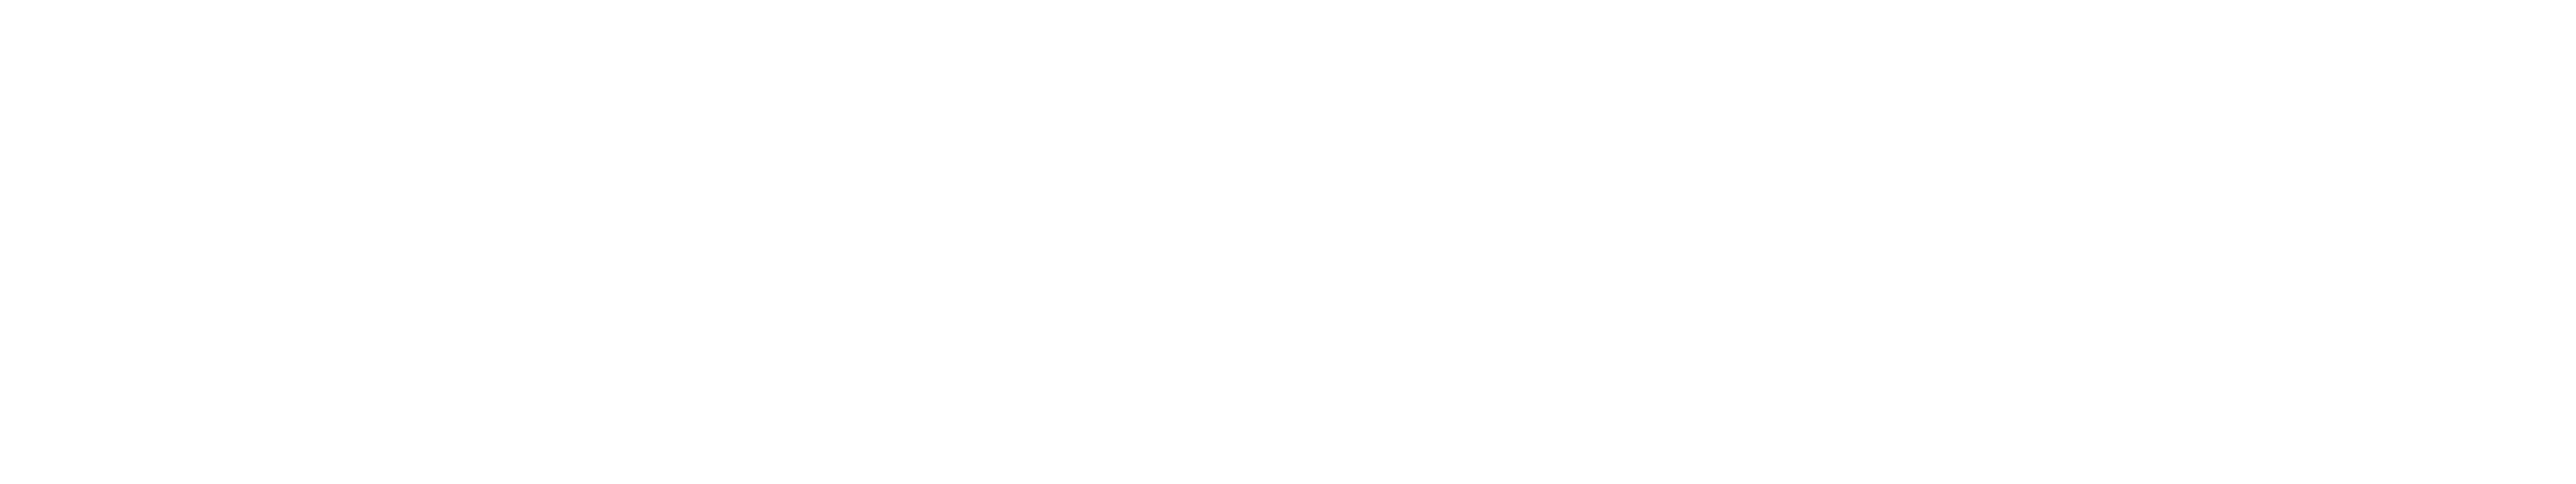 Tremor International Logo groß für dunkle Hintergründe (transparentes PNG)